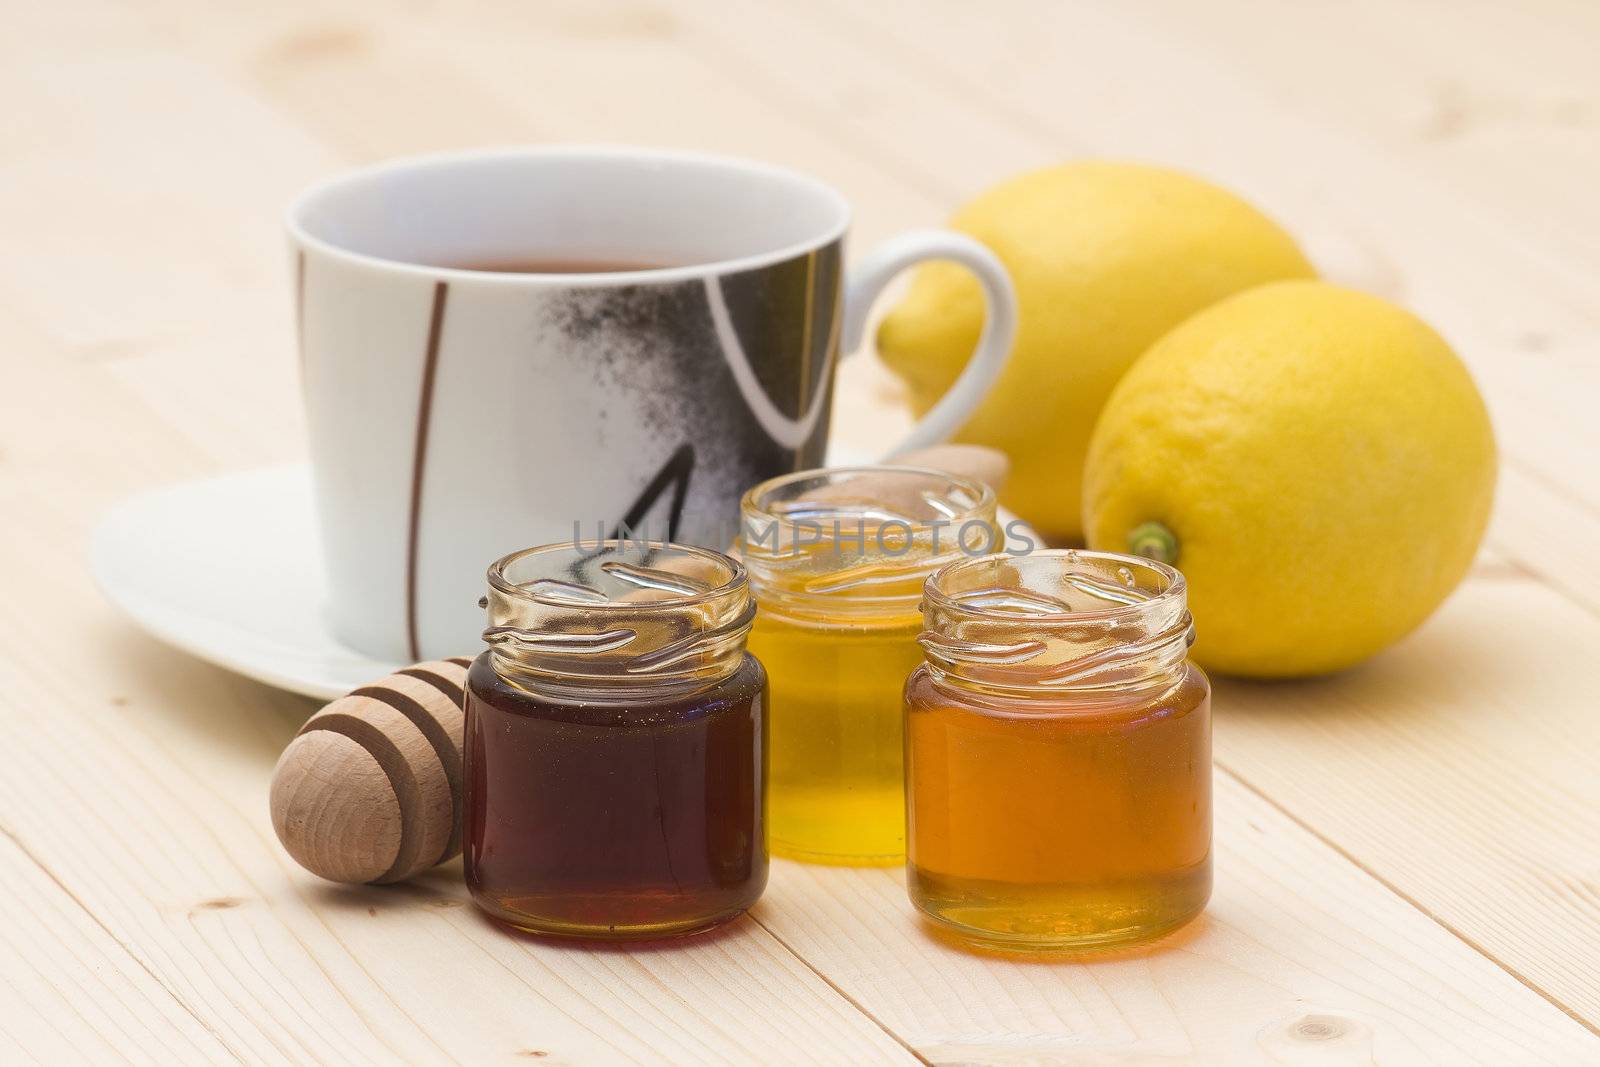 cup of tea, honey and fresh lemons